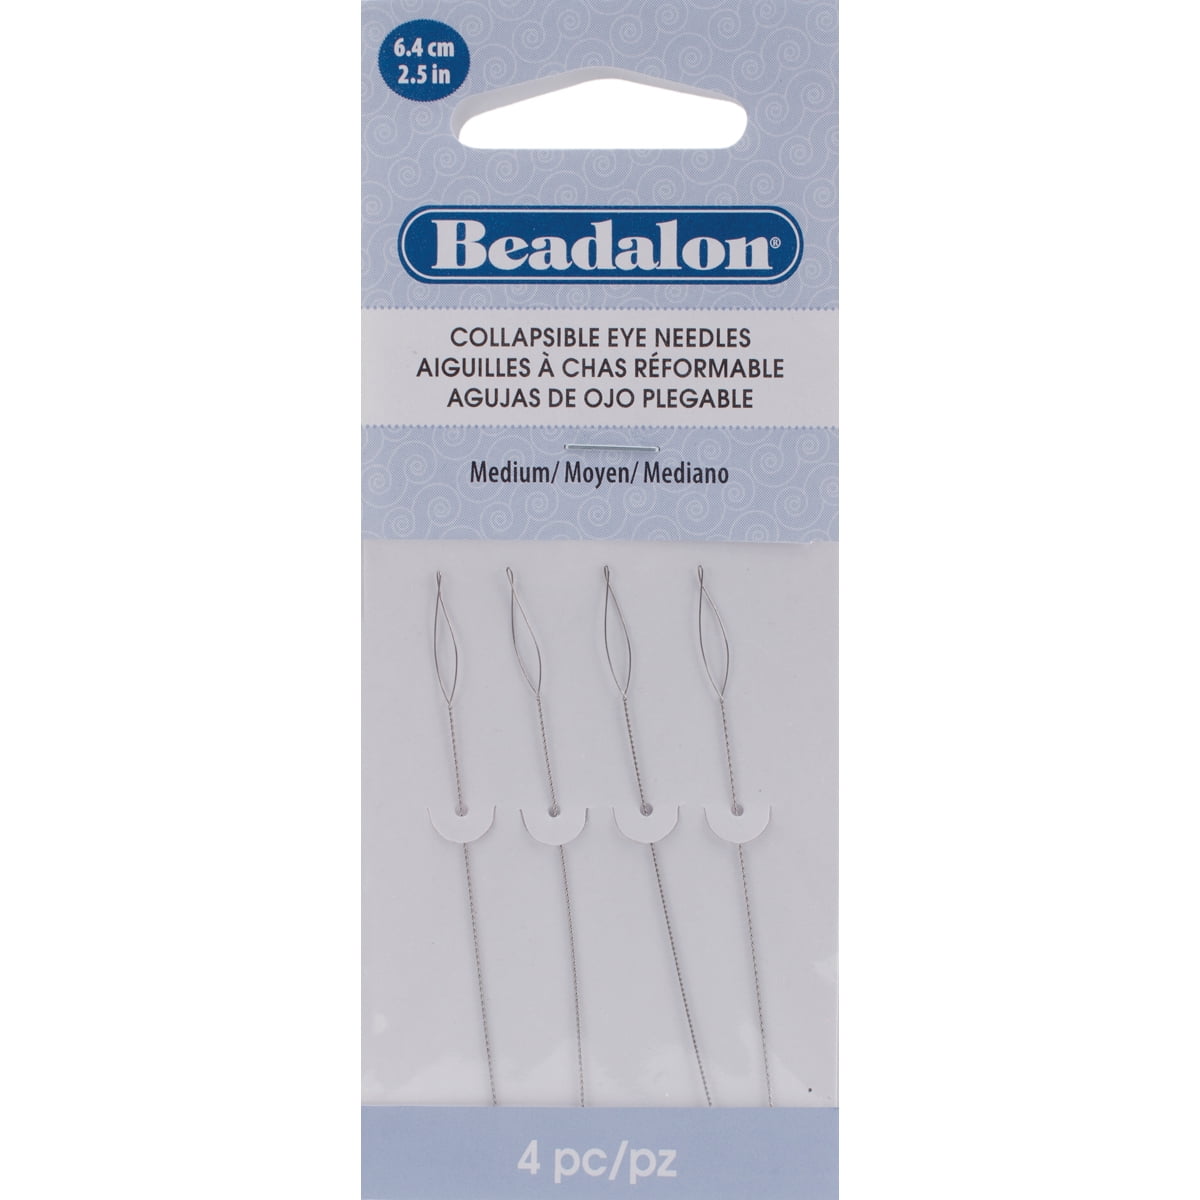 4 pcs Beadalon® Collapsible Eye Needles Extra Fine Size 6.4cm Length